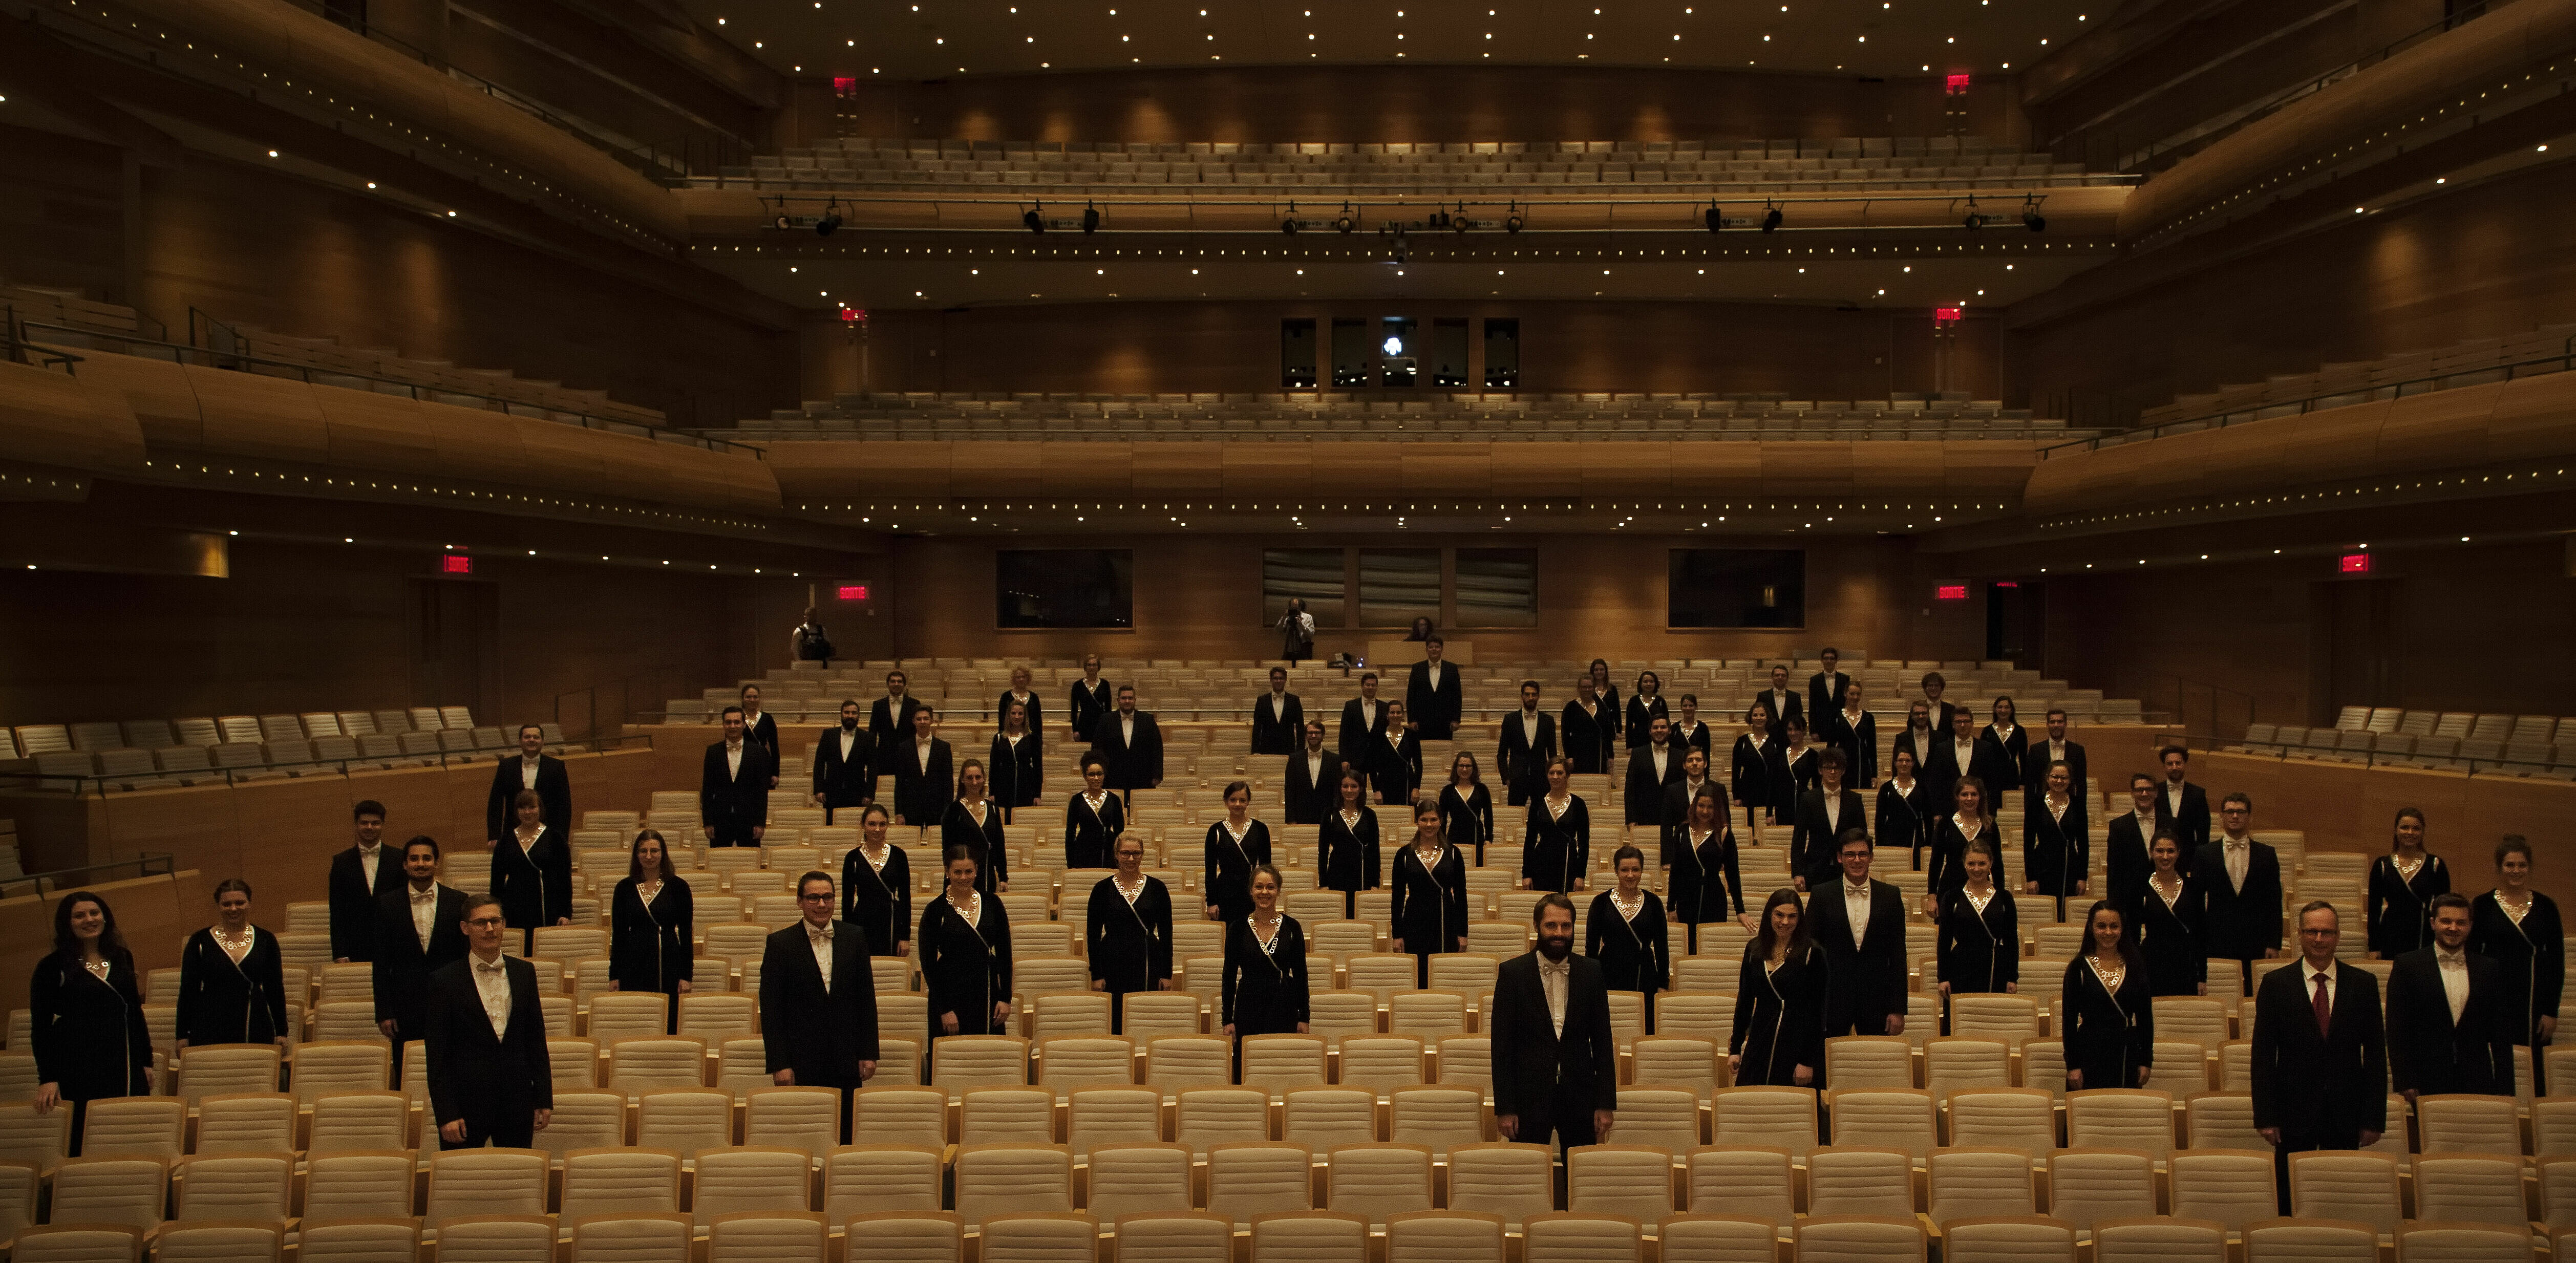 The Audi Young Persons' Choral Academy at "Maison symphonique" in Montréal